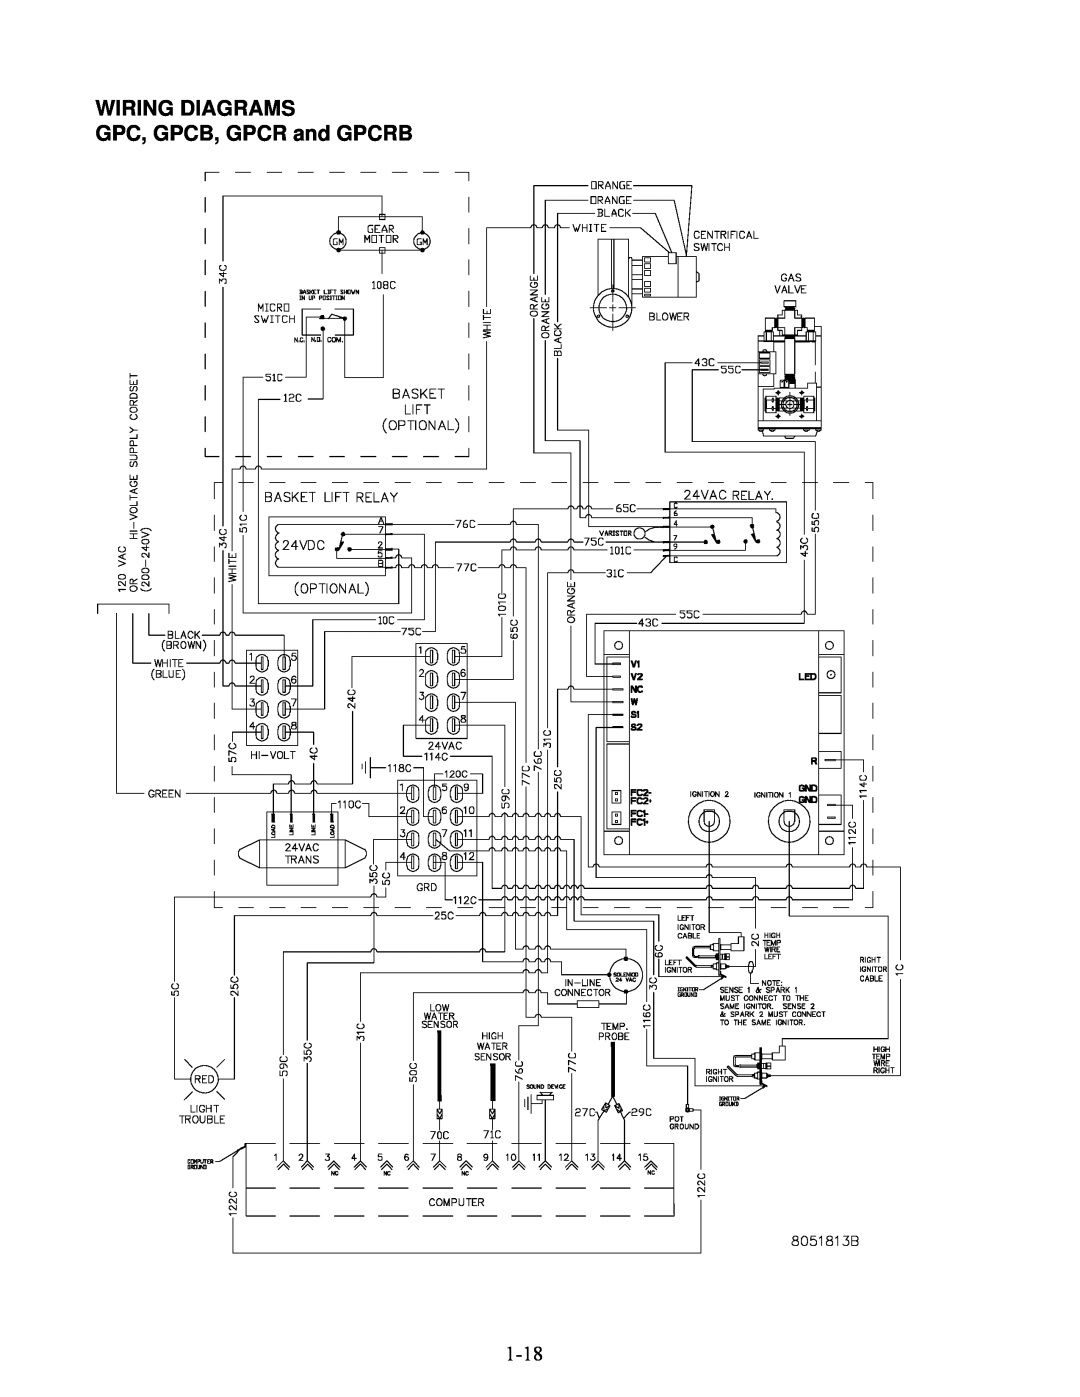 Frymaster 8196692 manual WIRING DIAGRAMS GPC, GPCB, GPCR and GPCRB 